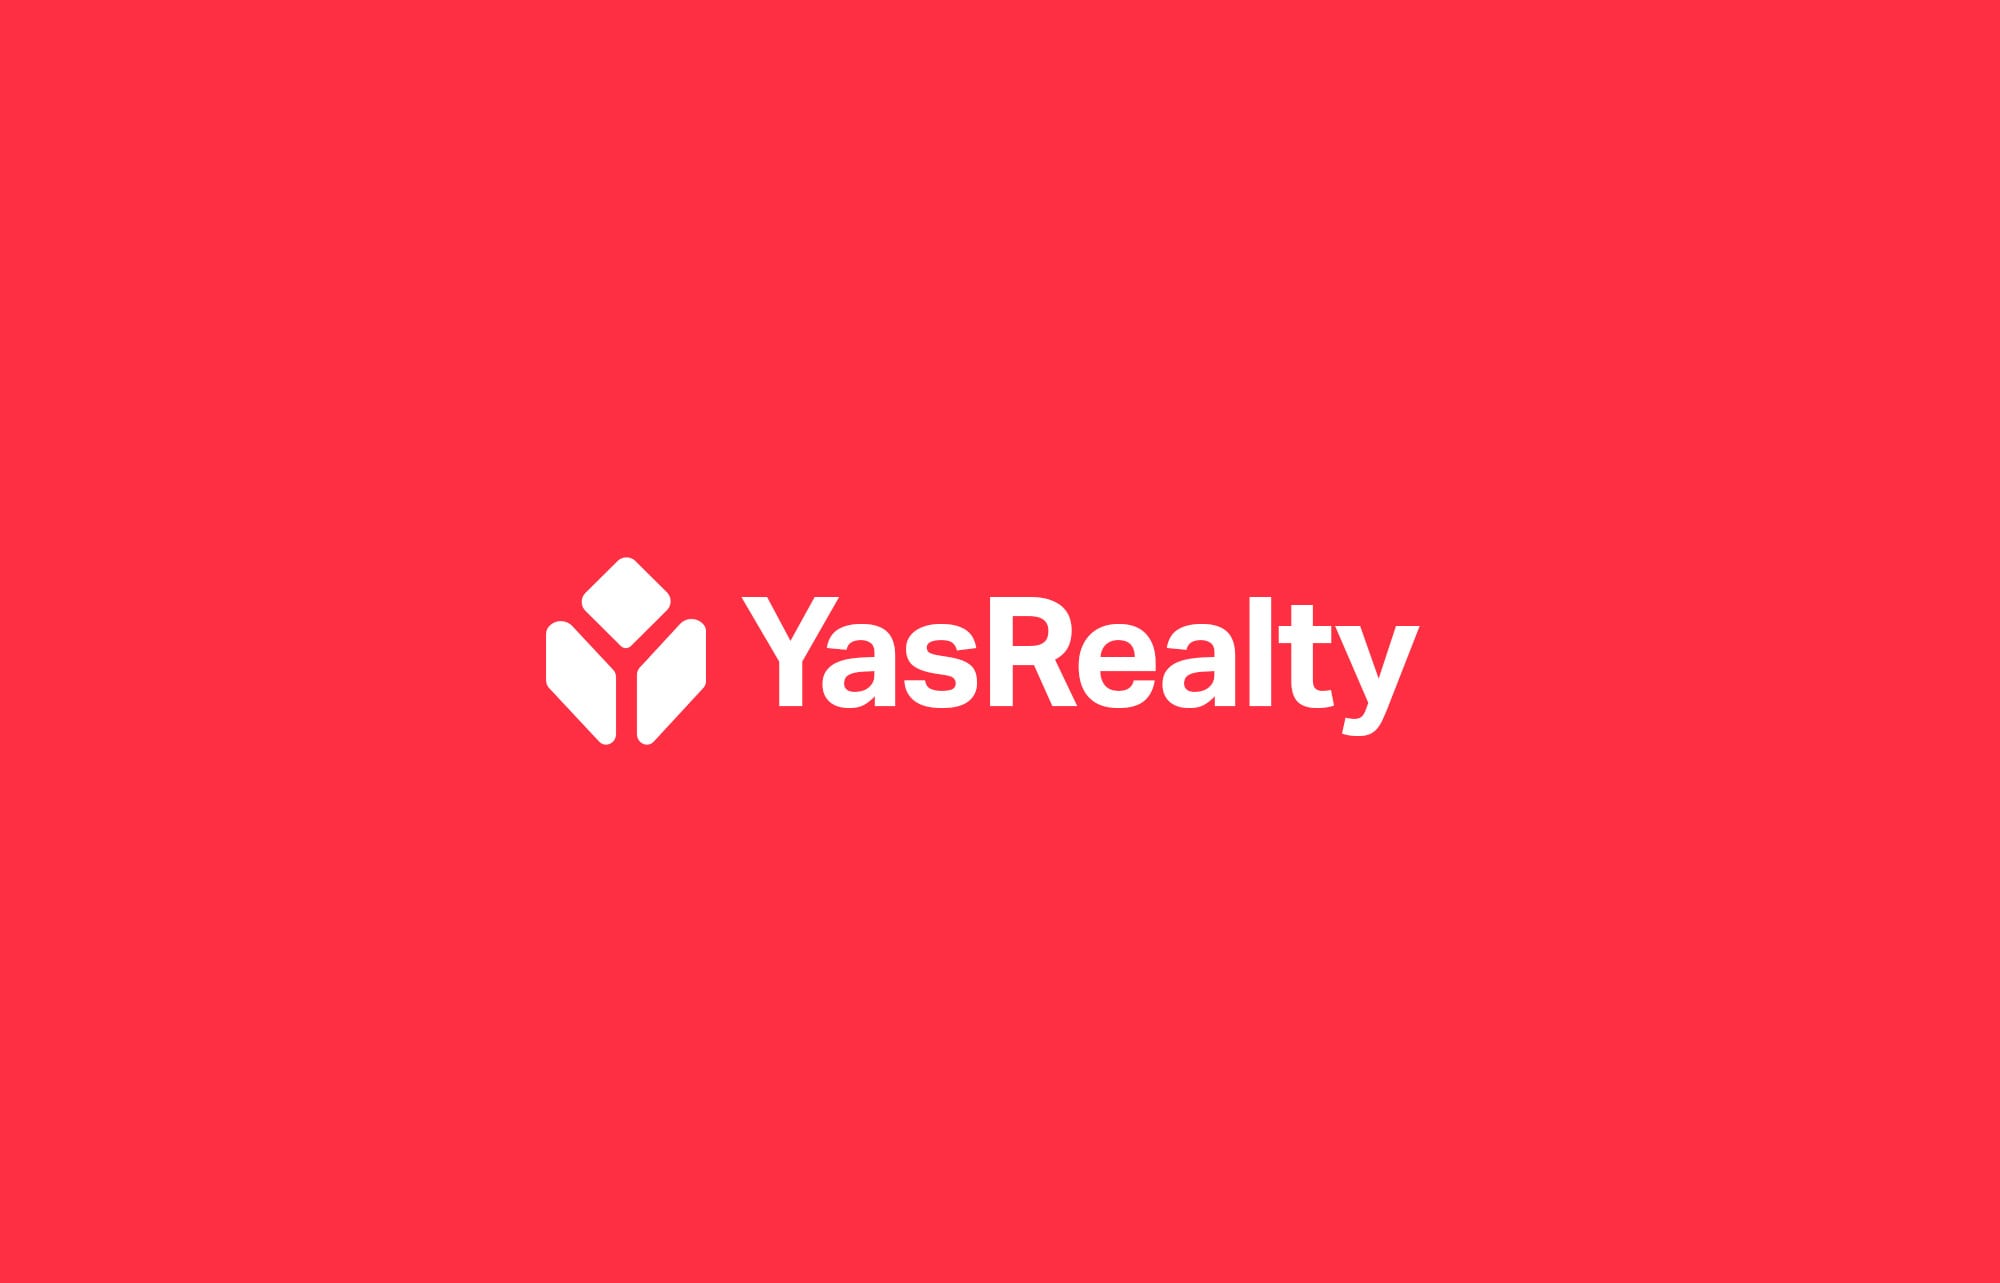 Yas Realty Logo